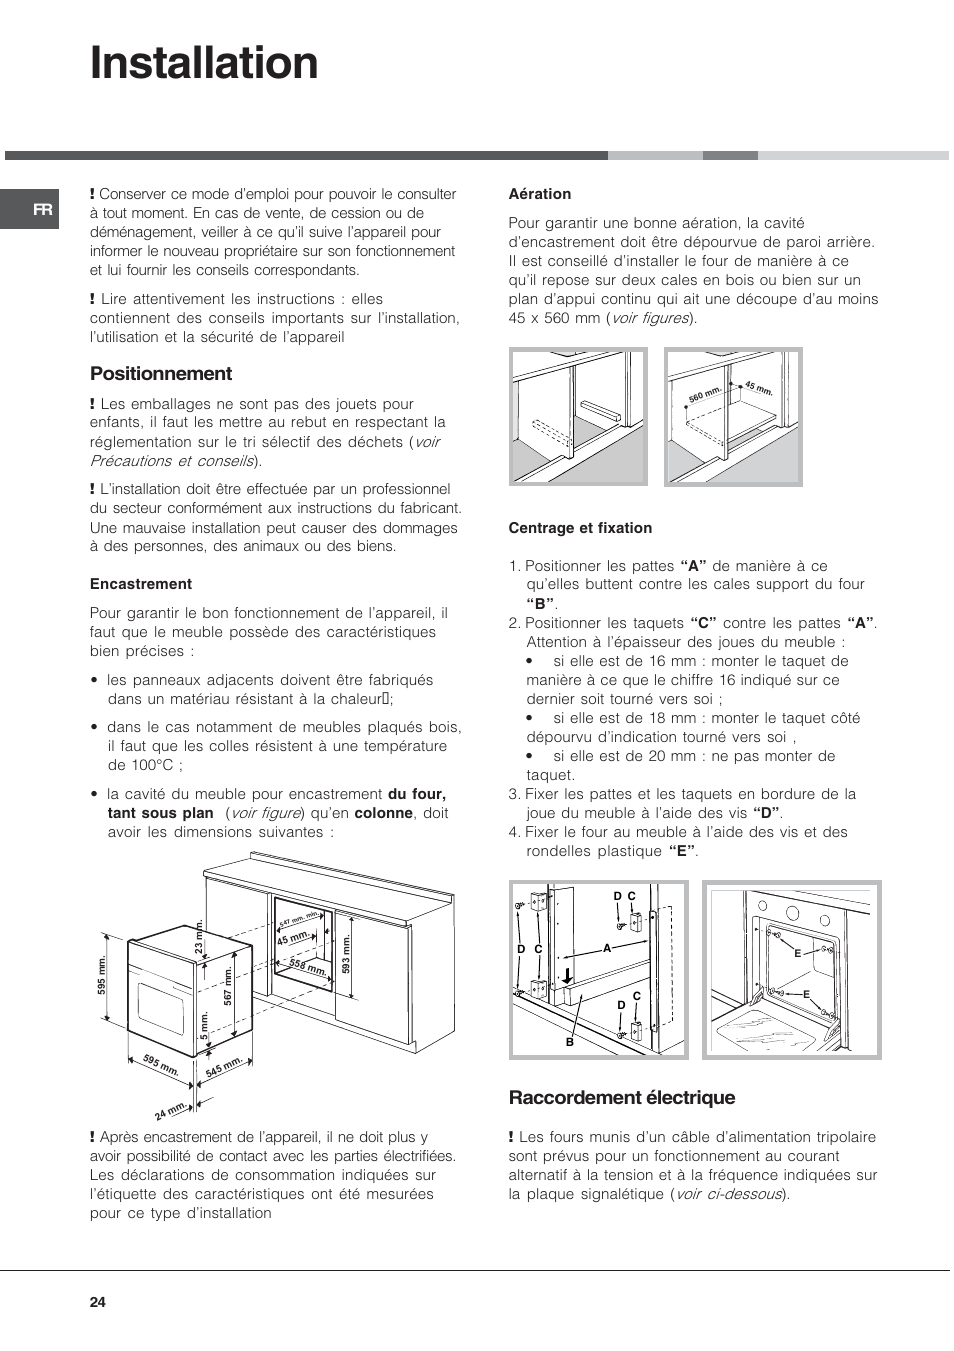 Installation, Positionnement, Raccordement électrique | Hotpoint Ariston FT 850.1/HA User Manual | Page 24 / 56